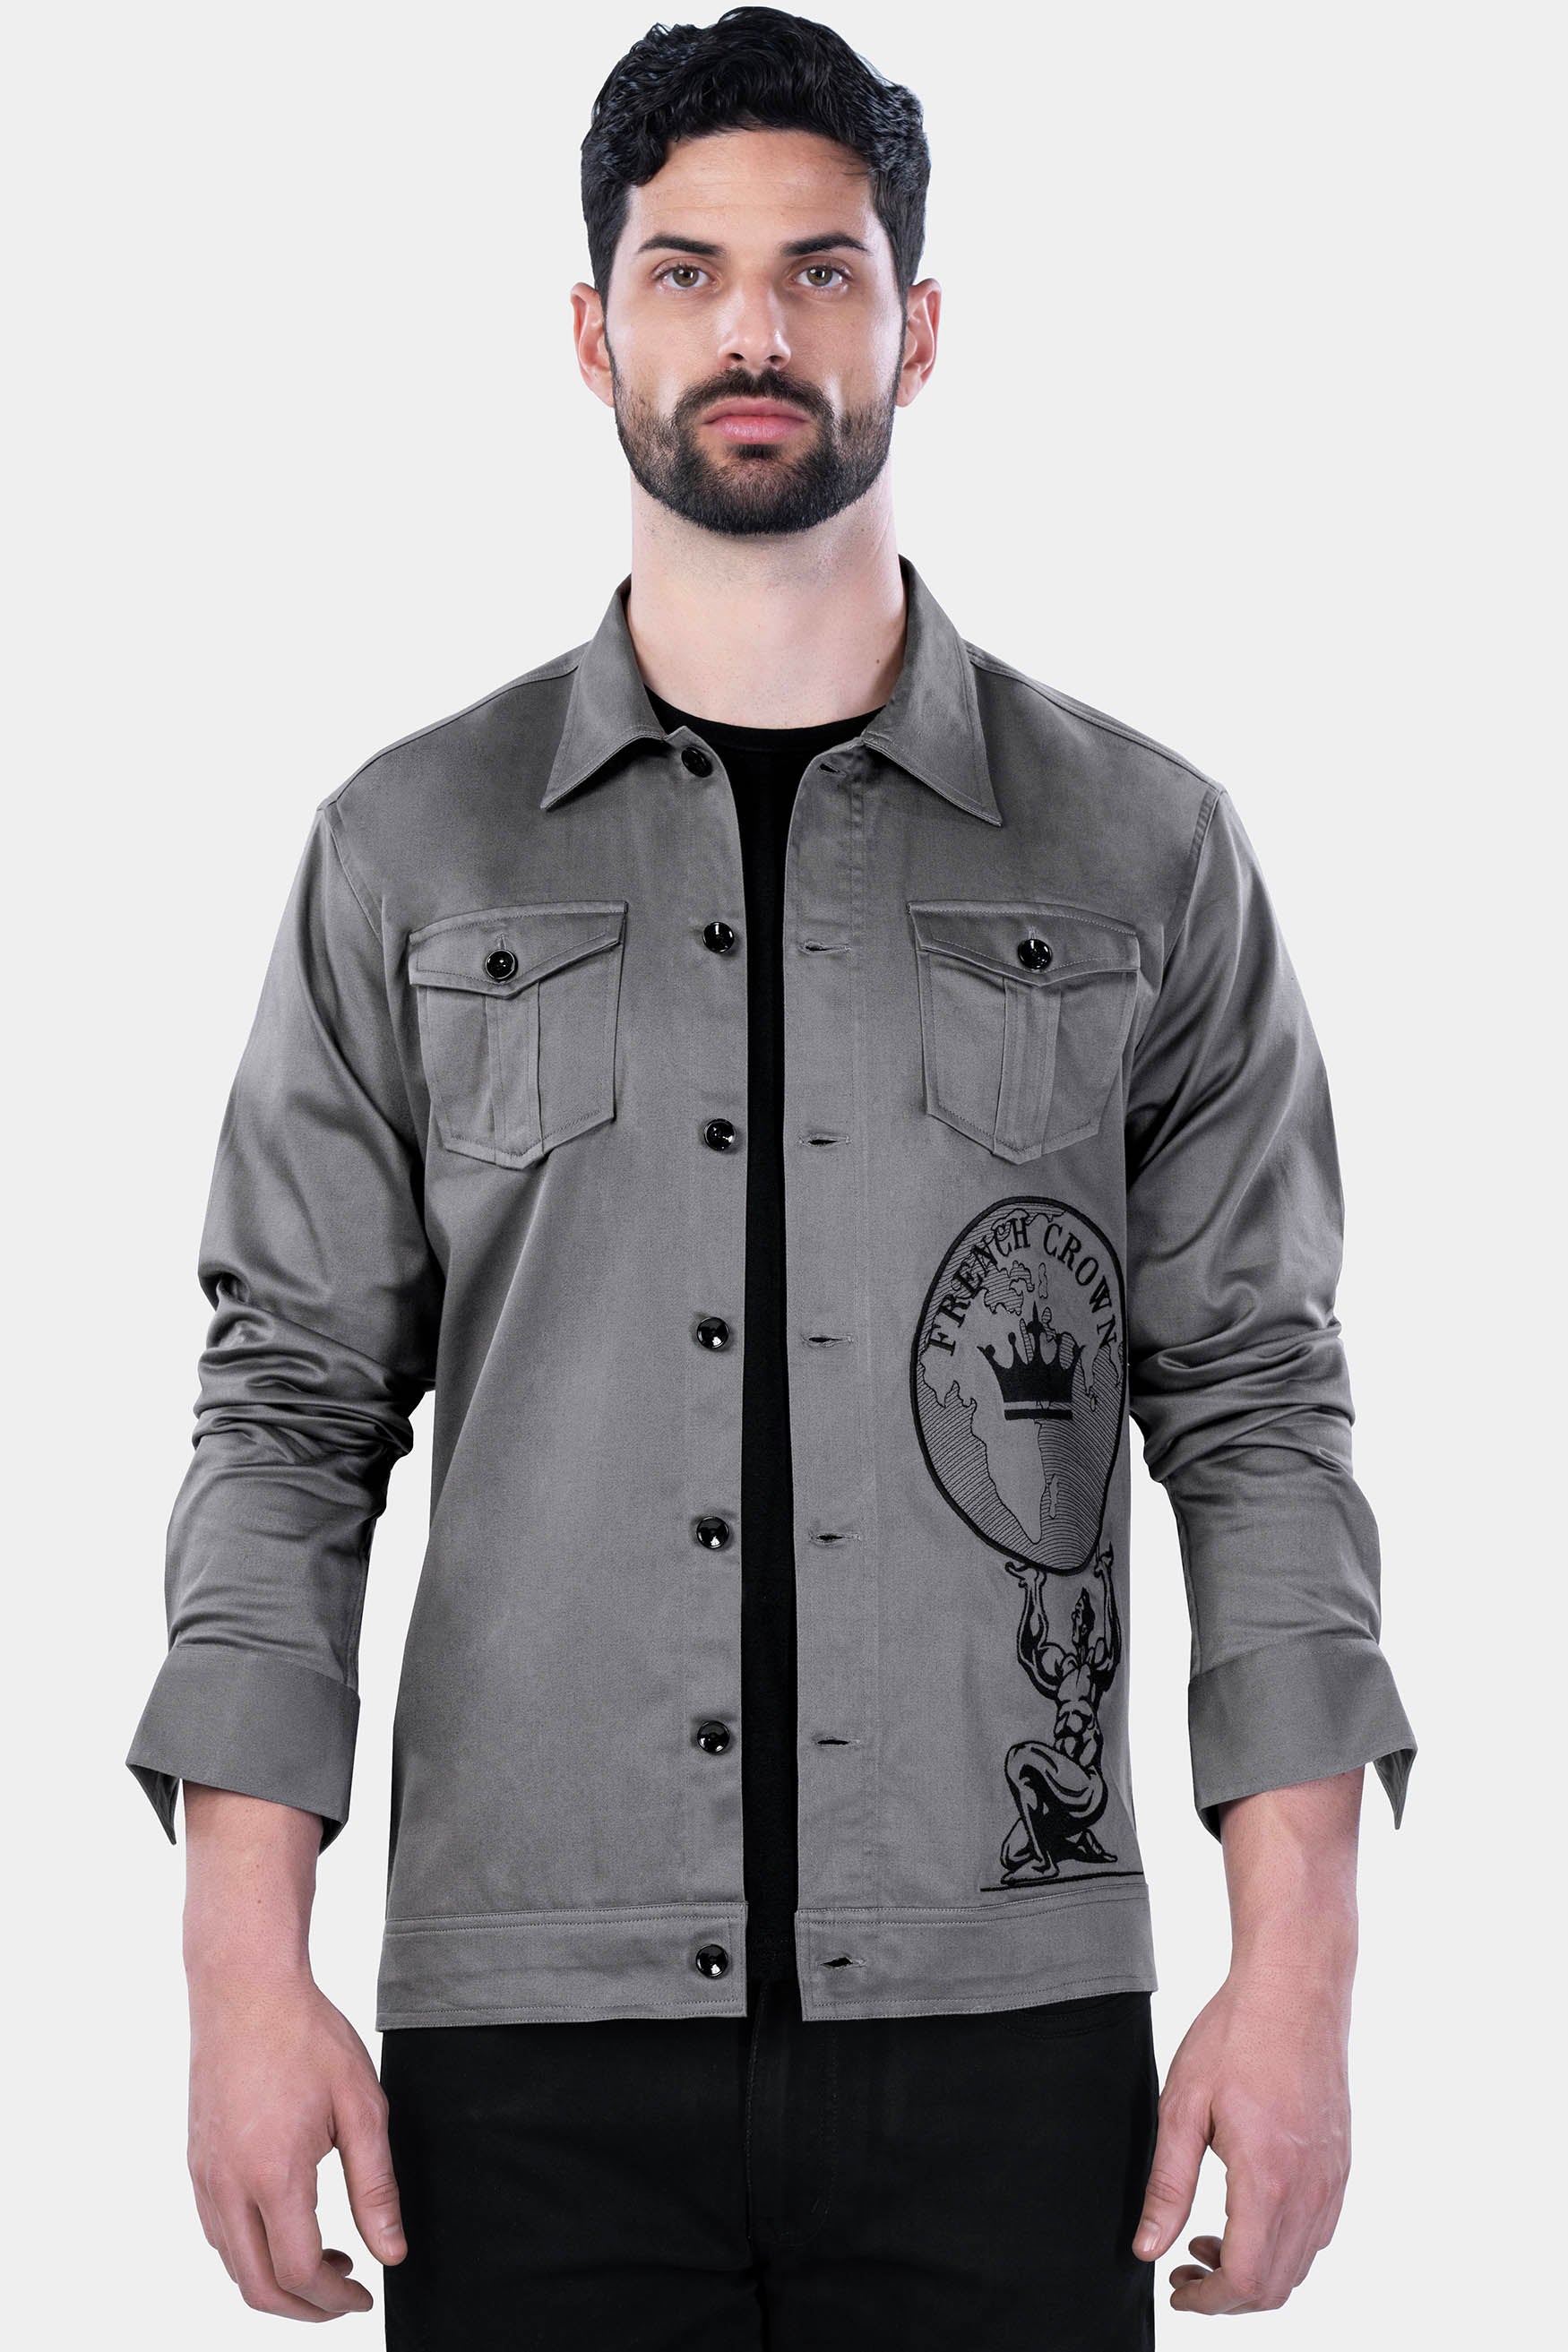 Boulder Gray Brand Name and Logo Embroidered Premium Cotton Oversized Designer Shirt